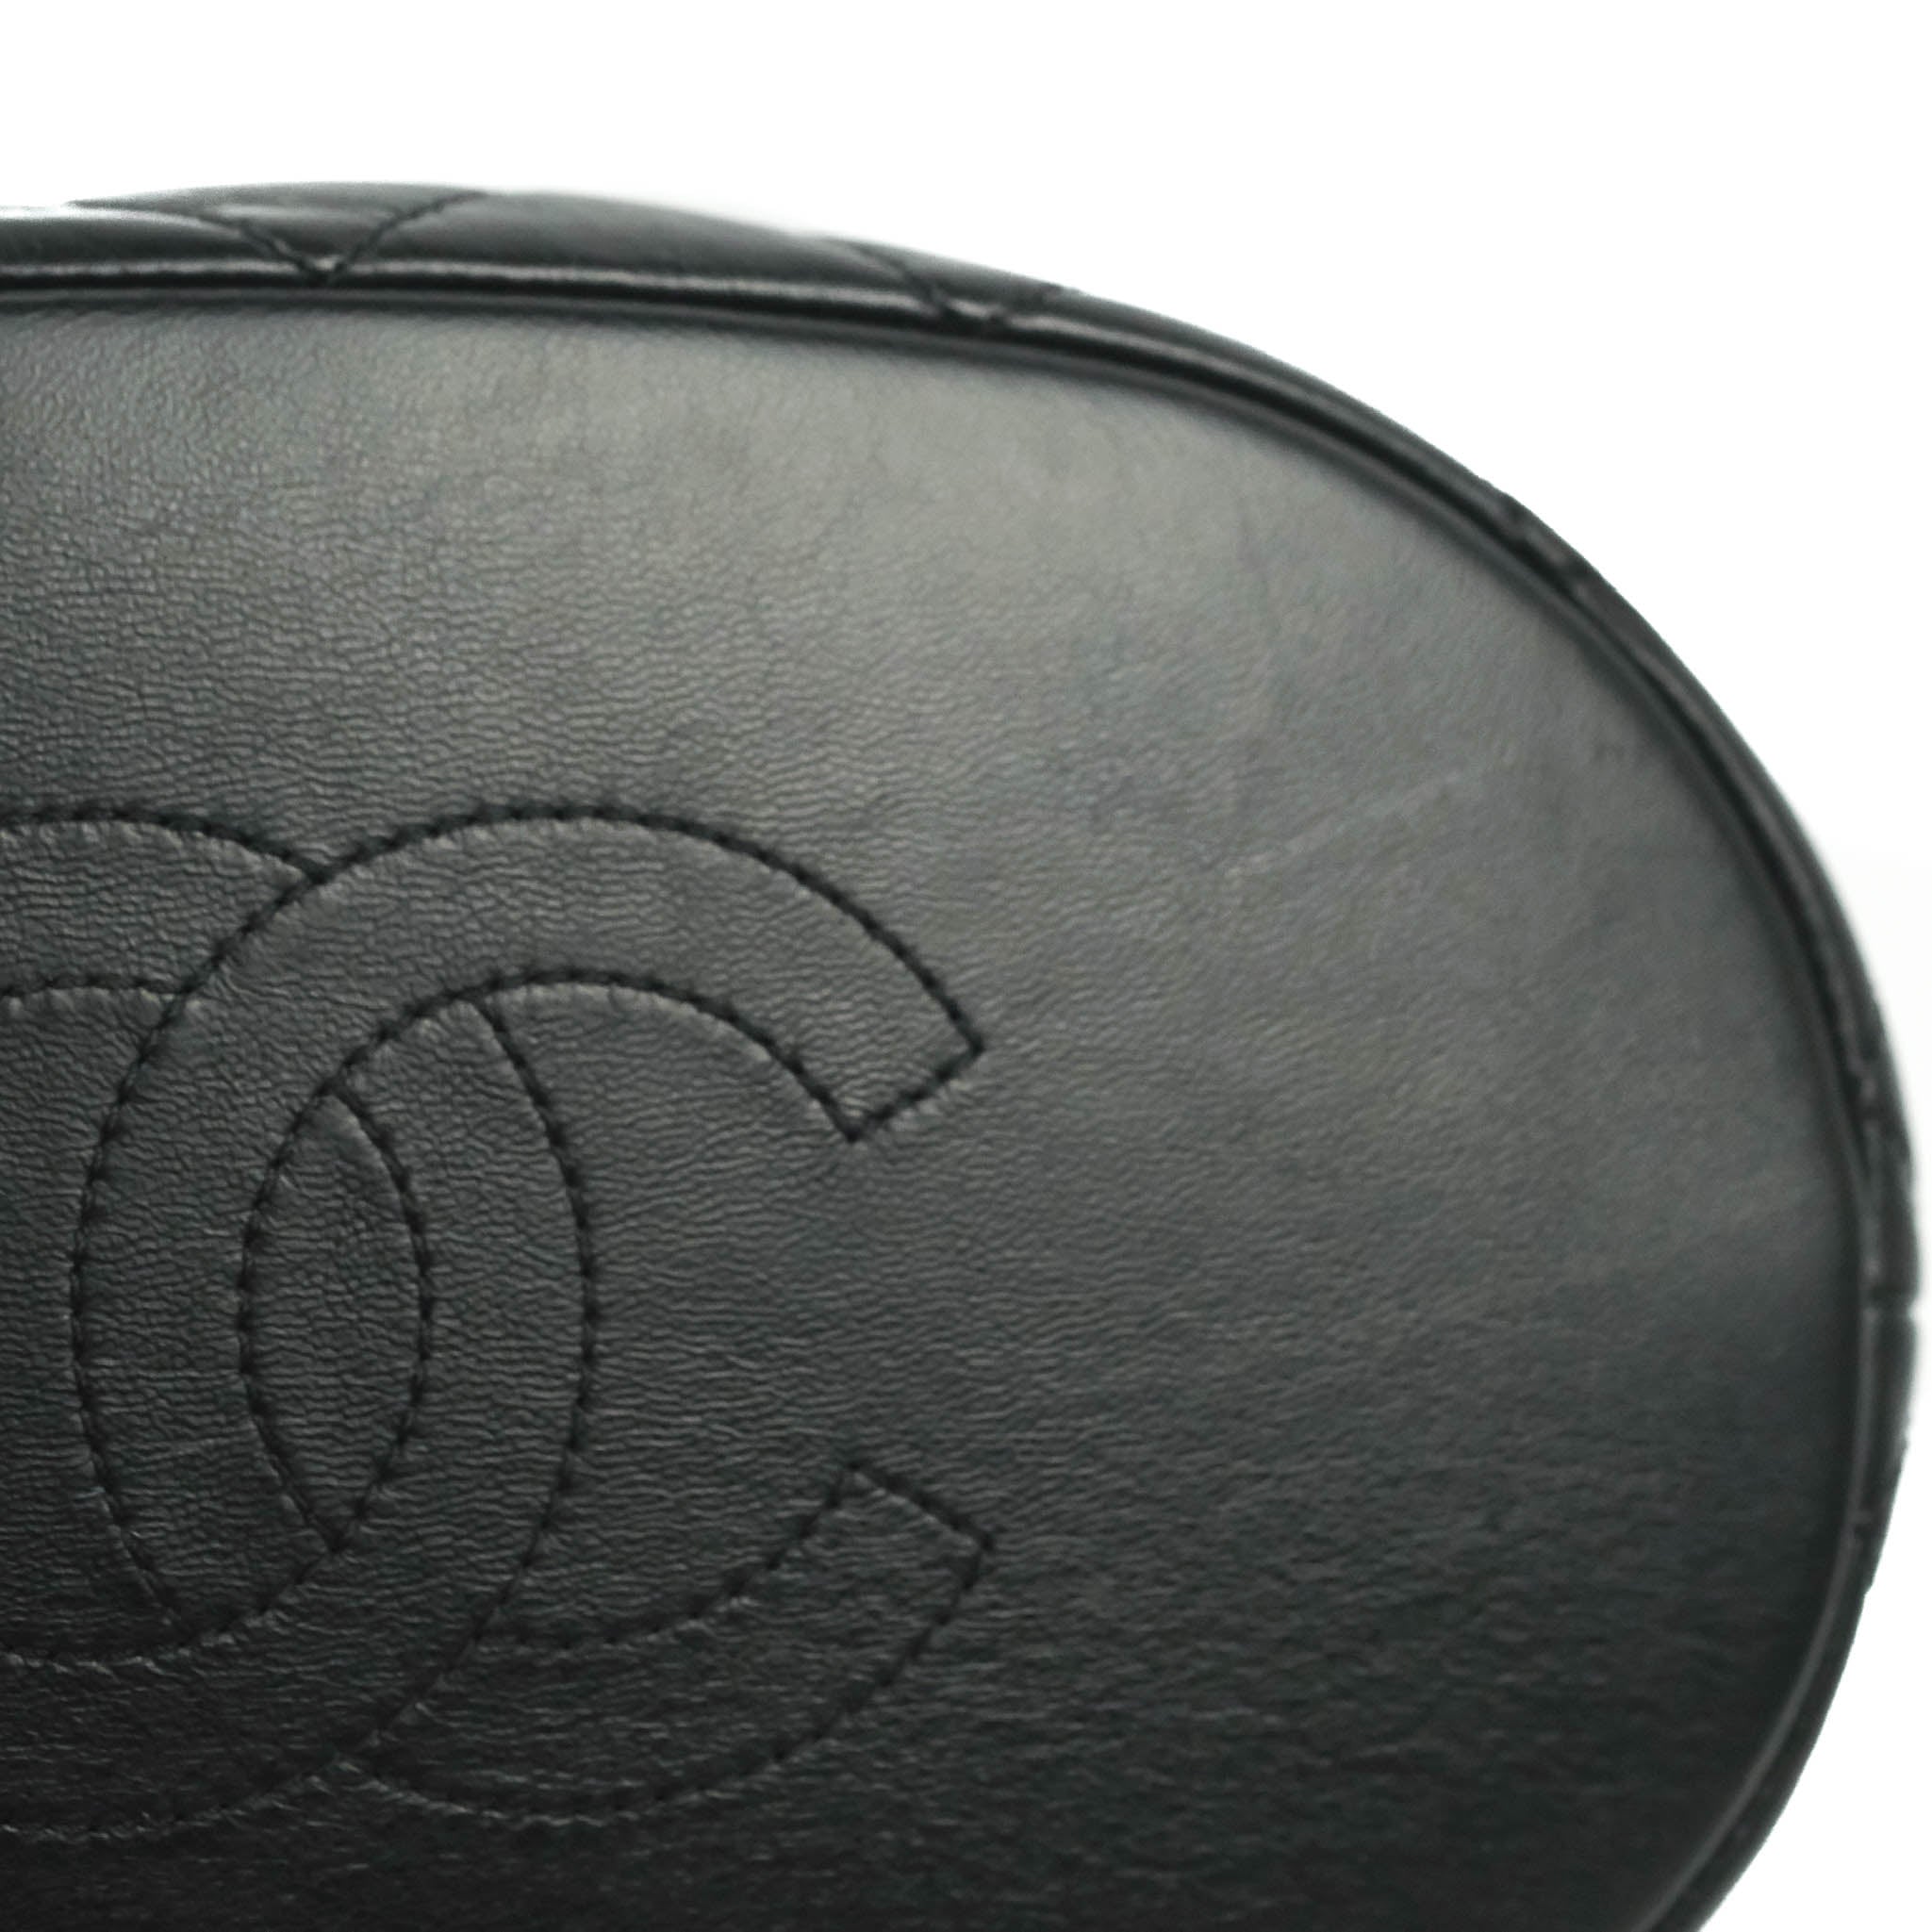 Chanel Enamel CC Bucket Bag Black Lambskin Gold Hardware 22S